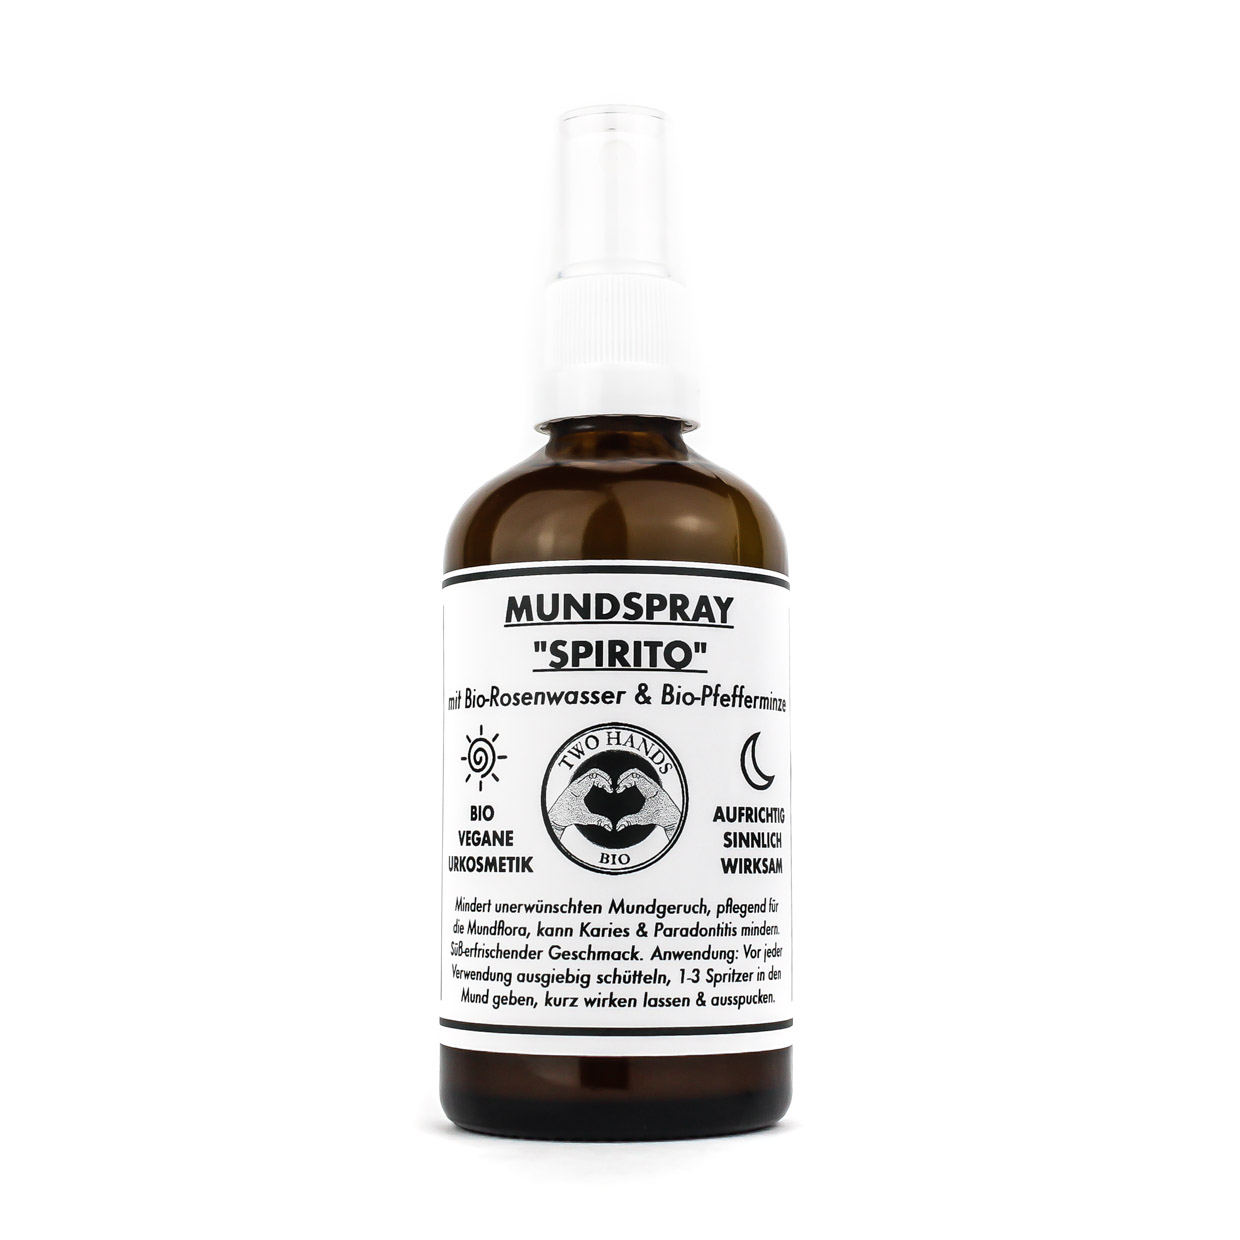 Mundspray „Spirito“ - Bio-Rosenwasser & Bio-Pfefferminze - Alkoholfrei - Bio Vegan